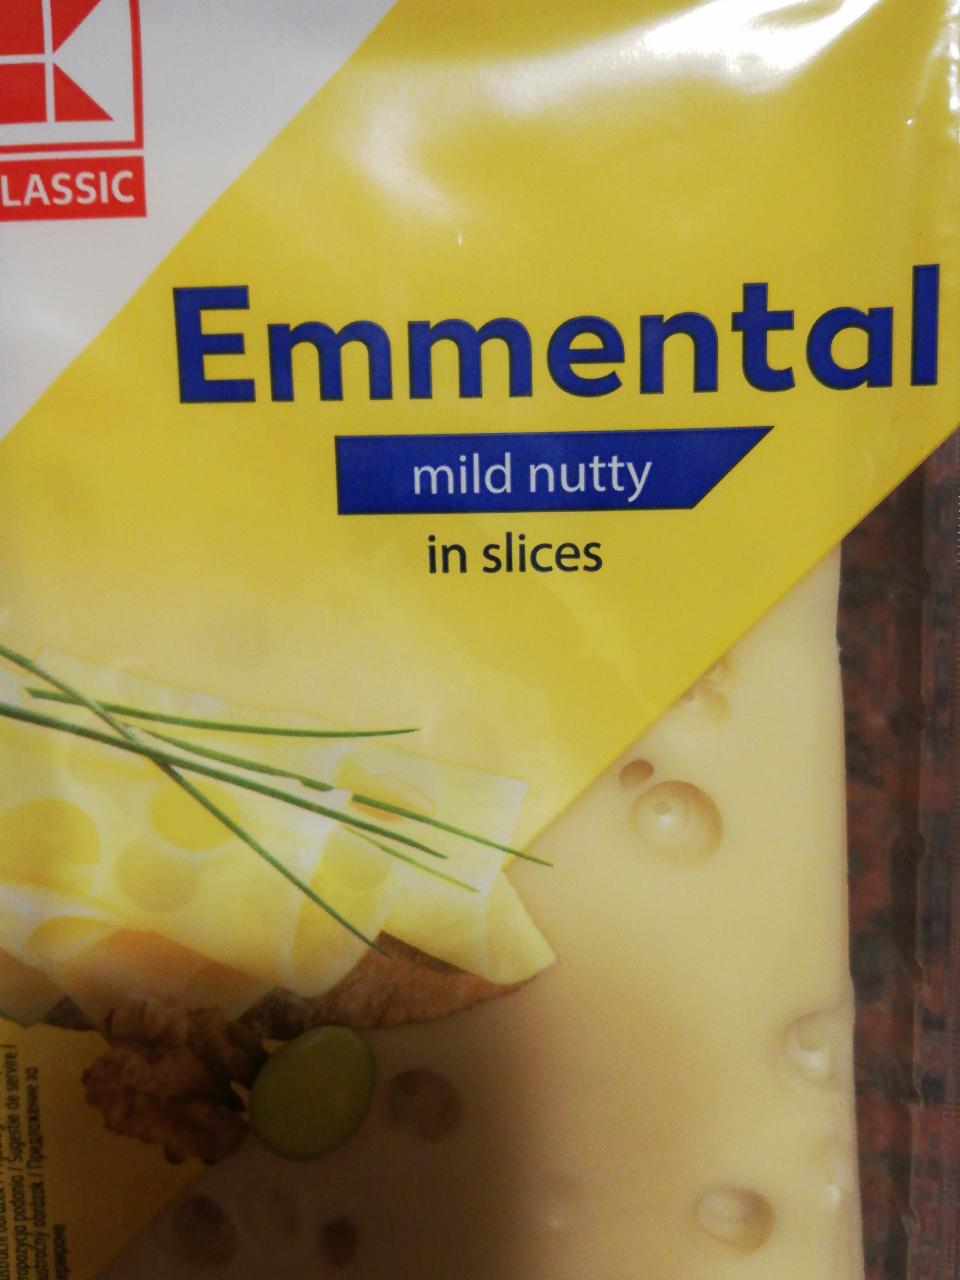 Fotografie - Emmental mild nutty in slices K-Classic